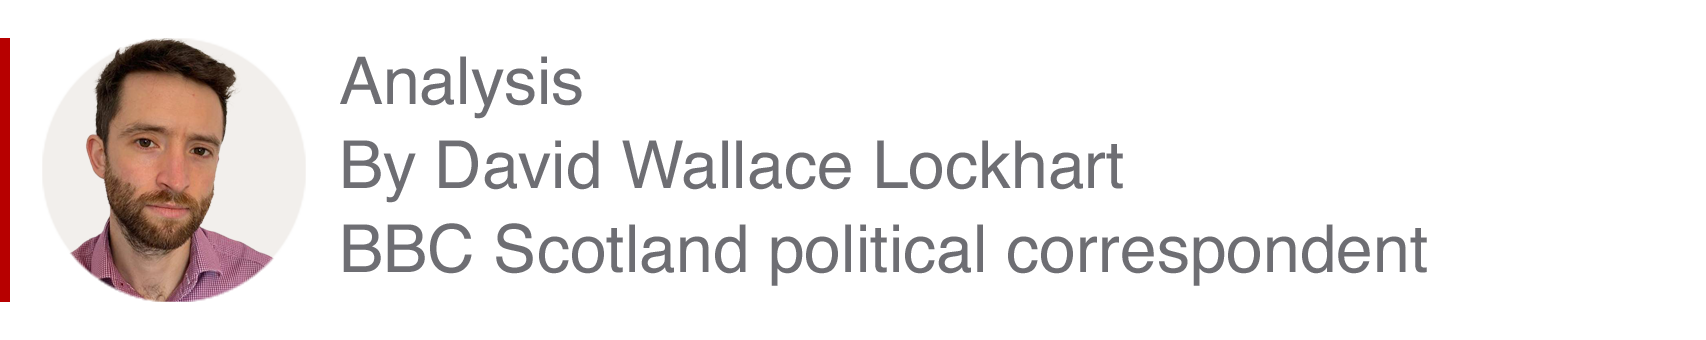 Analysis box by David Wallace Lockhart, BBC Scotland political correspondent